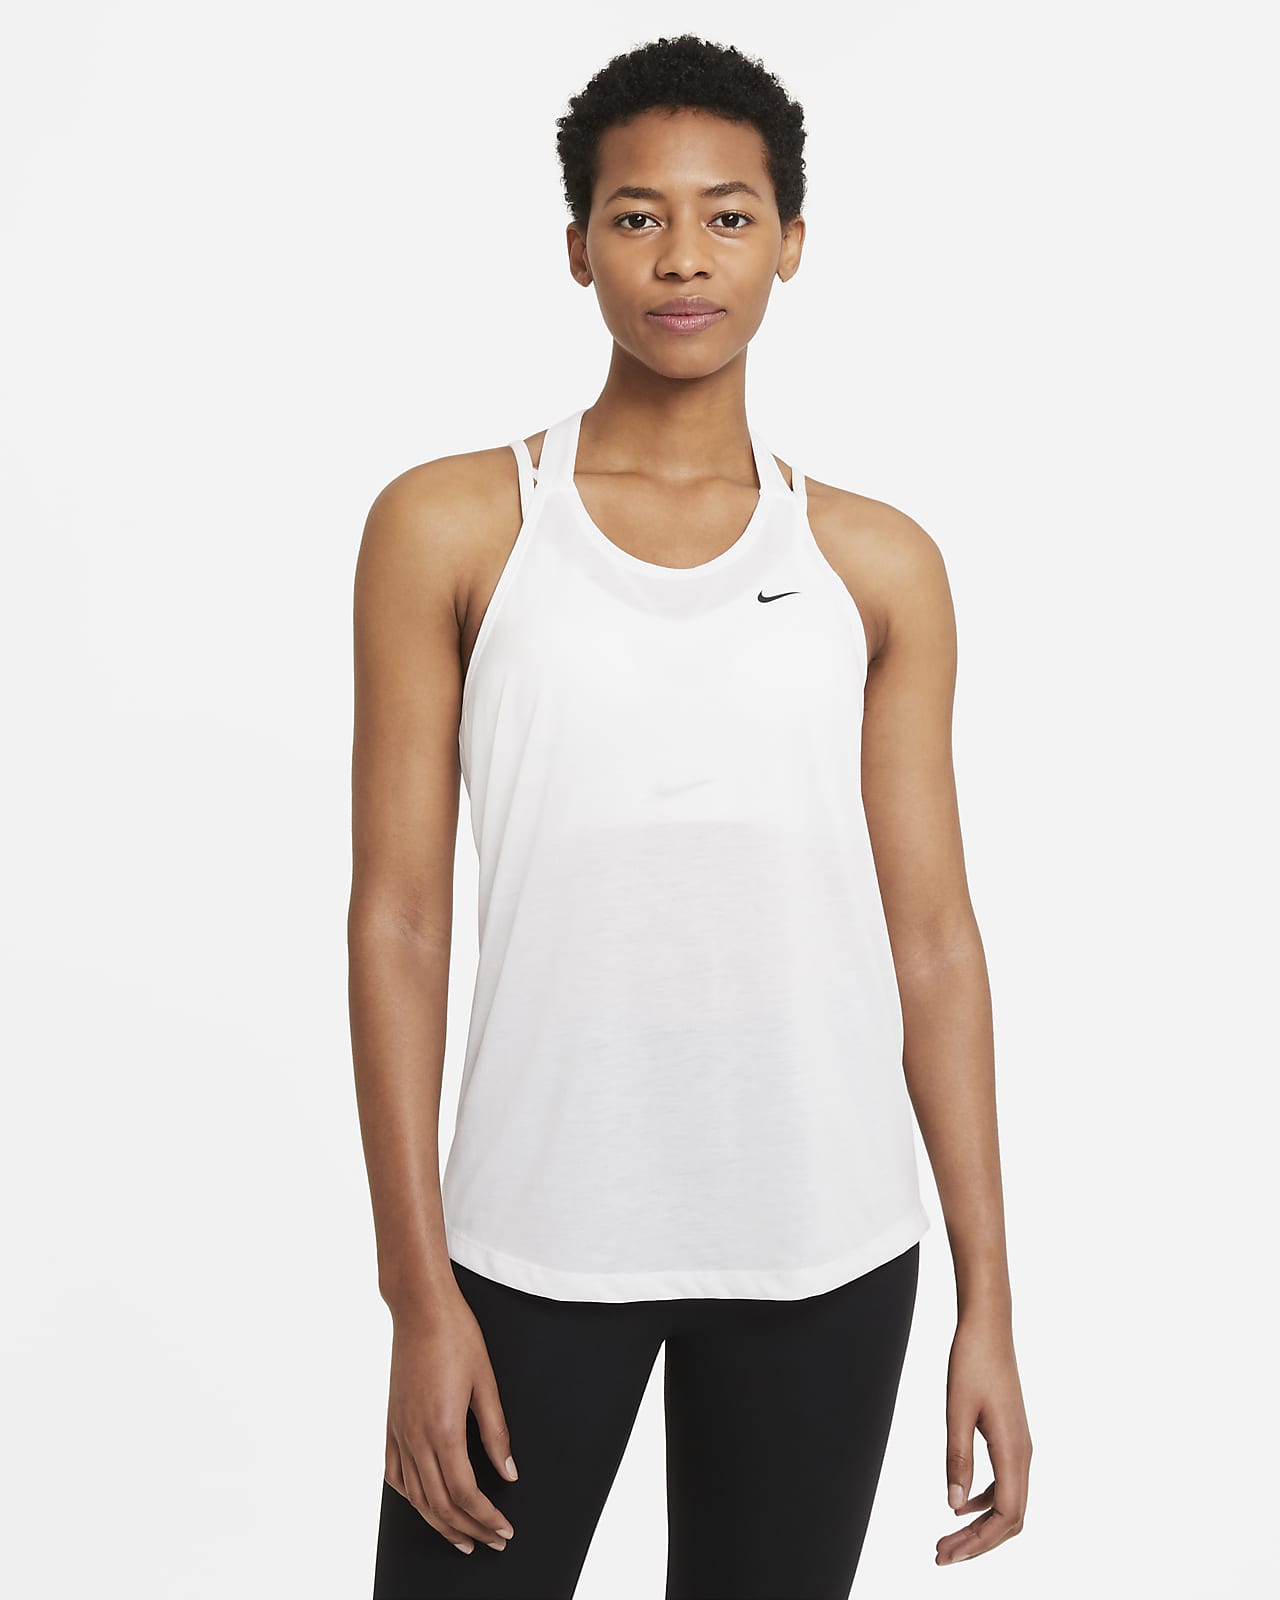 Women's White Tank Tops & Sleeveless Shirts. Nike AU